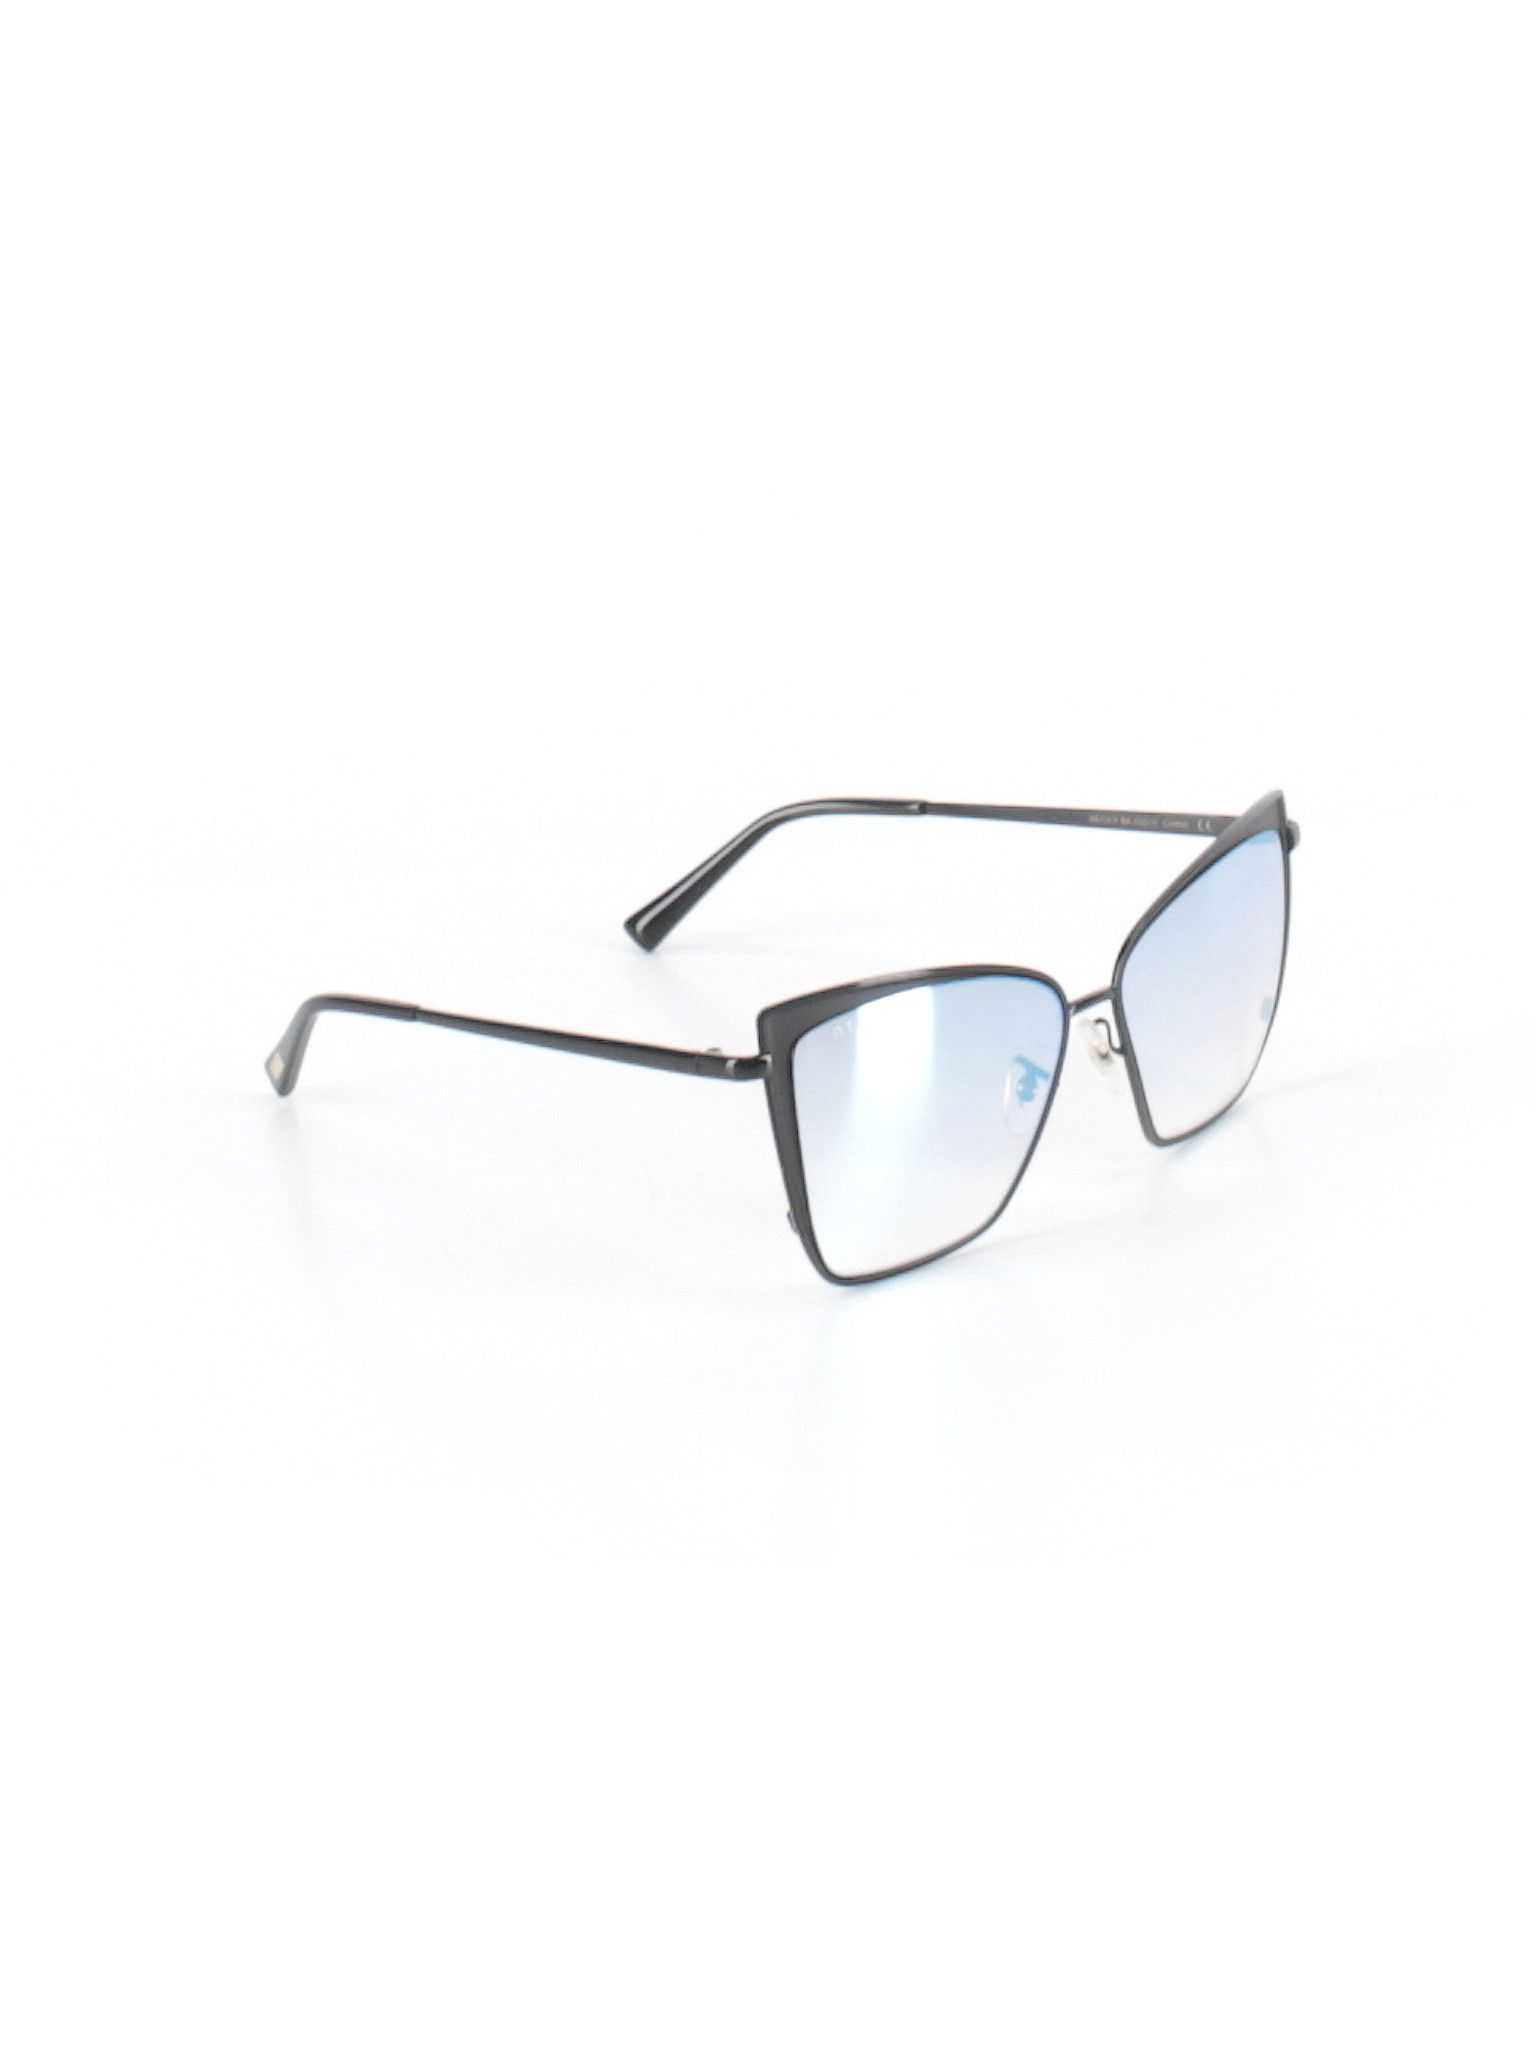 Diff Sunglasses Size 00: Black Women's Accessories - 39602652 | thredUP